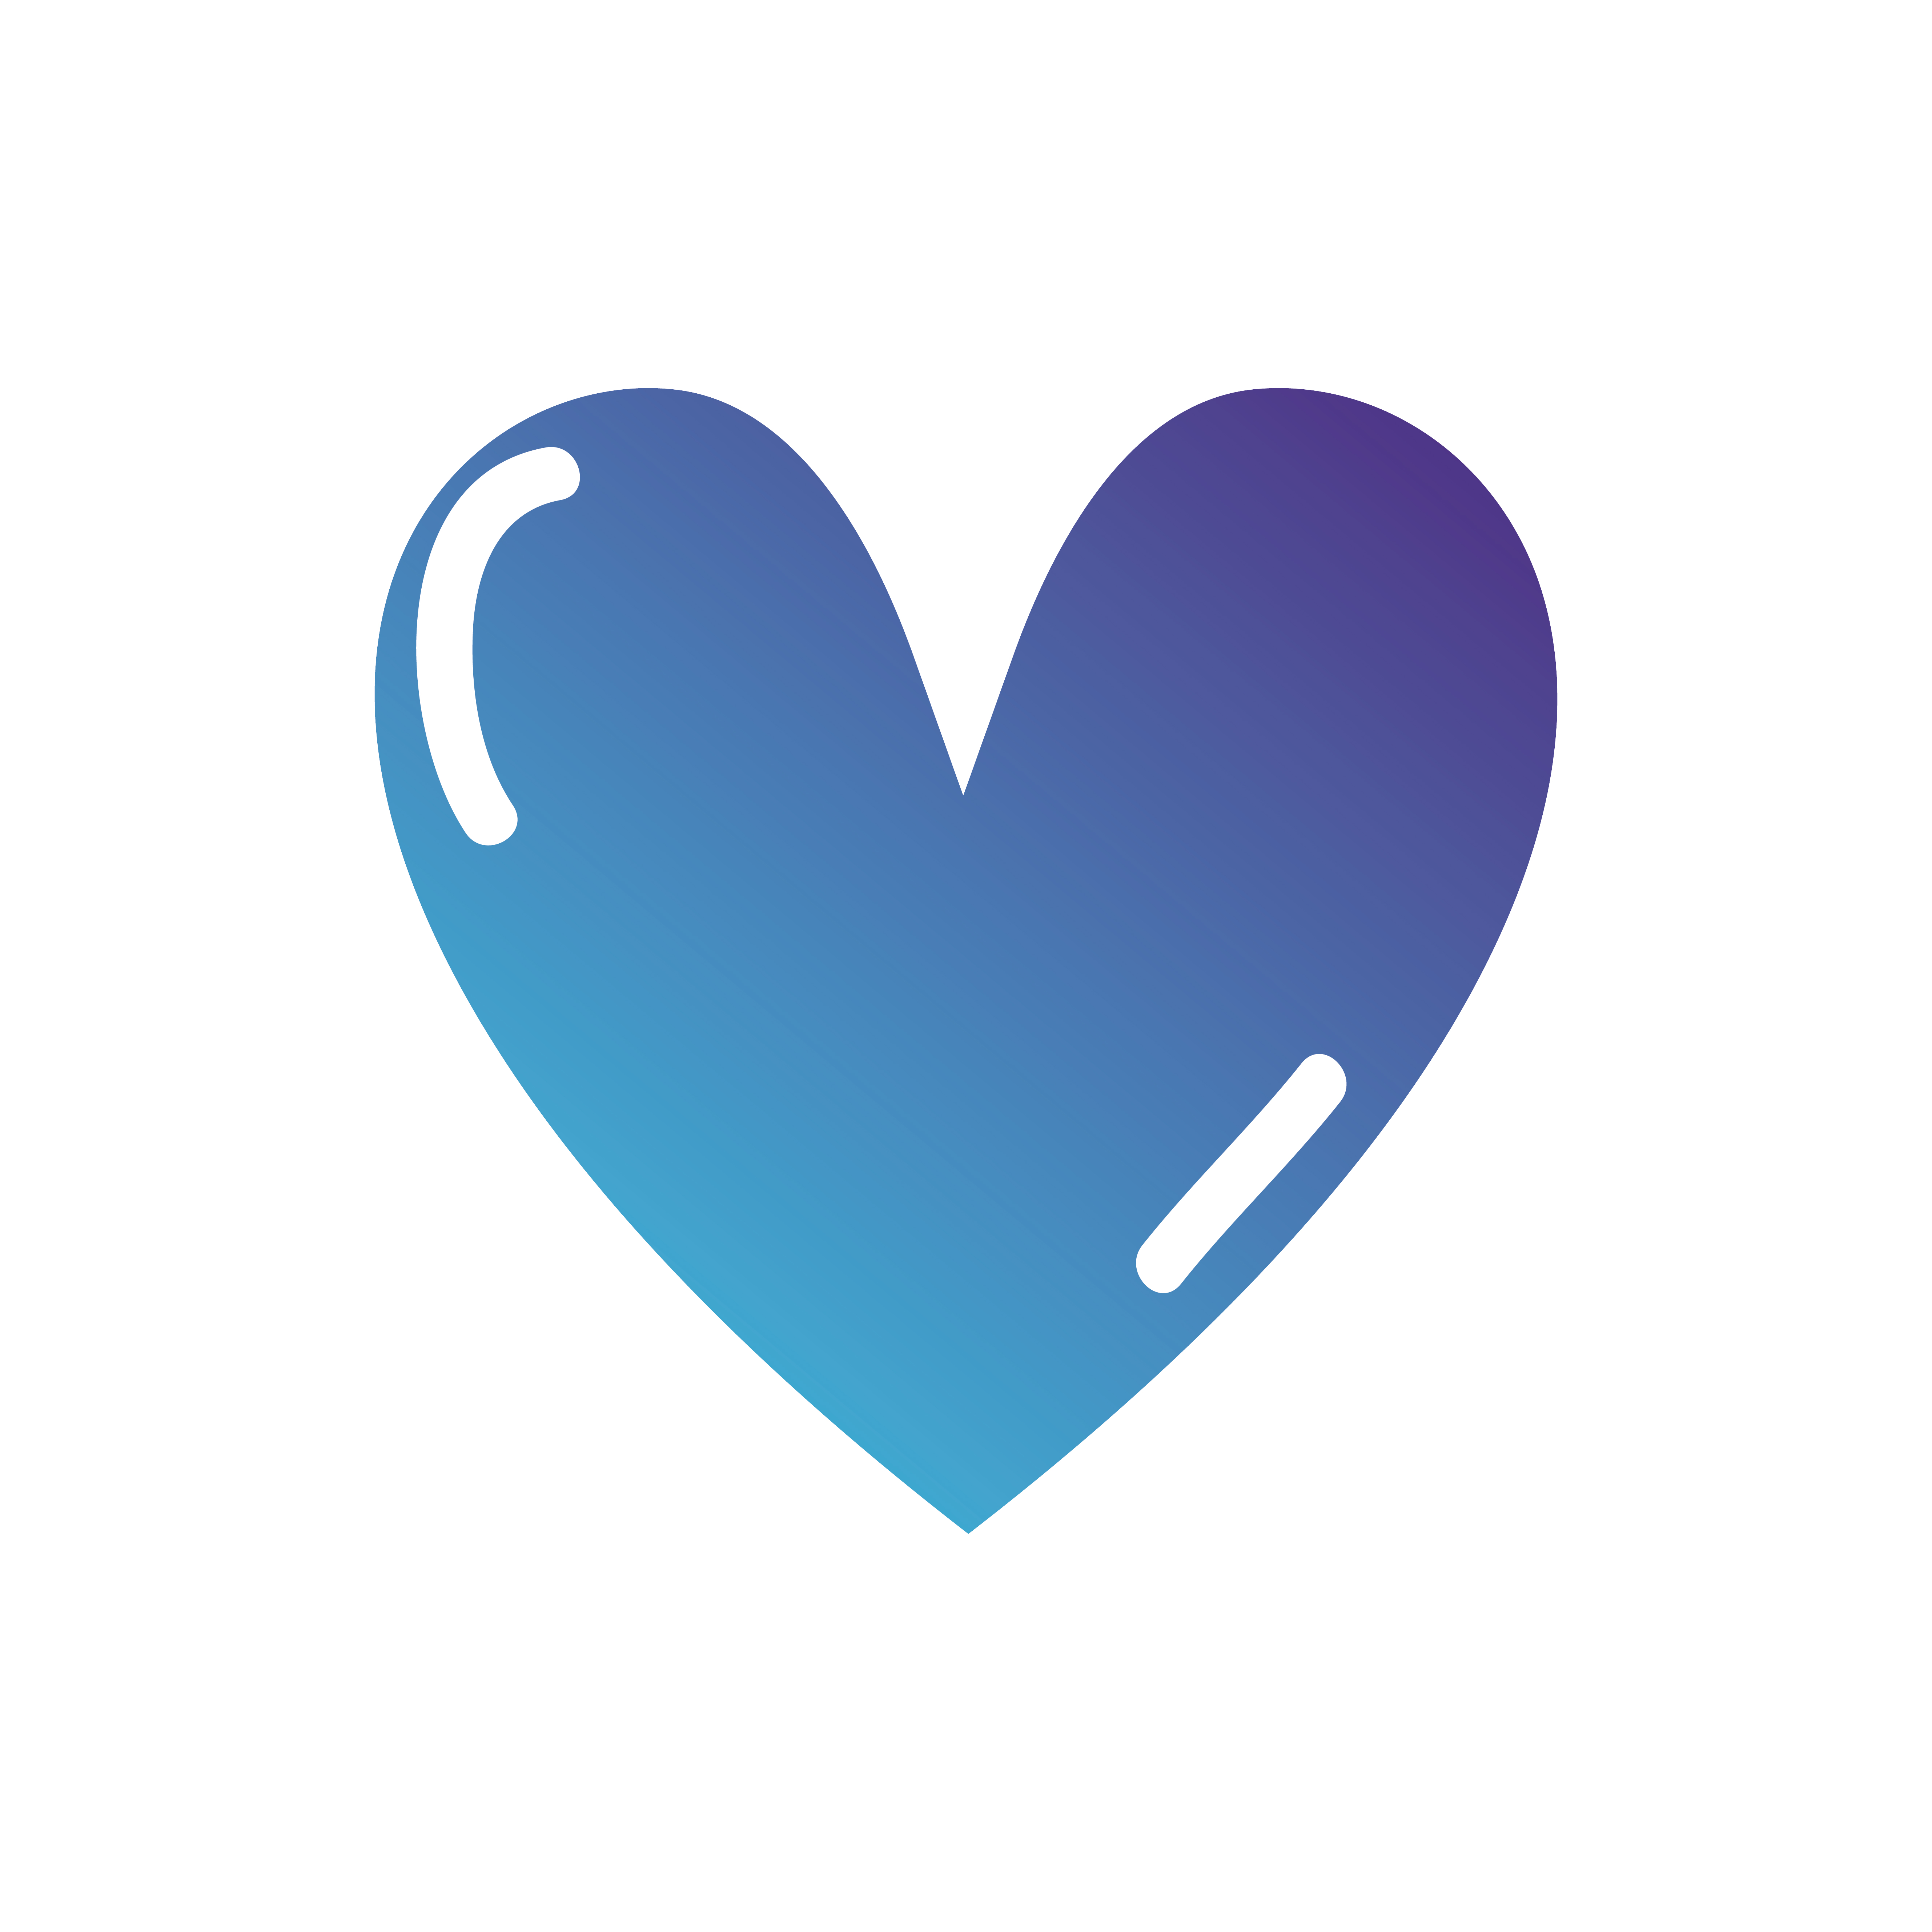 Download silhouette heart symbol love design - Download Free ...